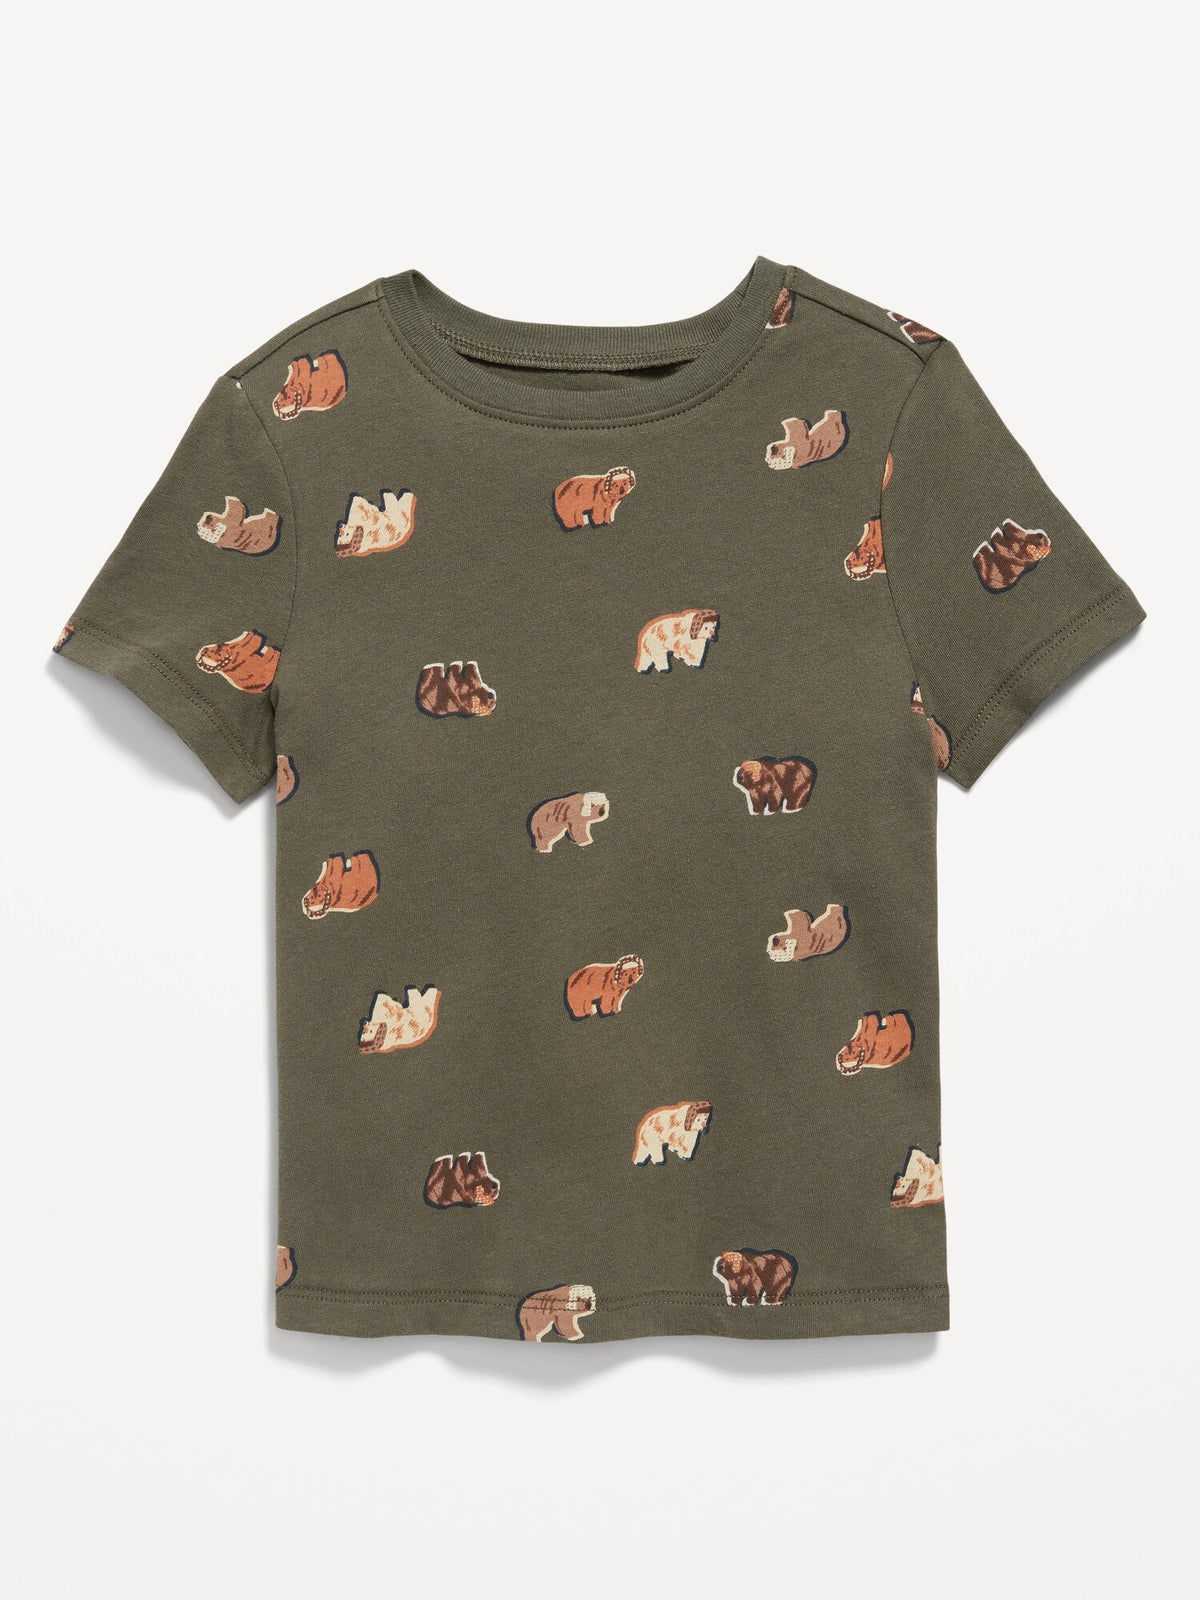 Unisex Printed Short-Sleeve T-Shirt for Toddler